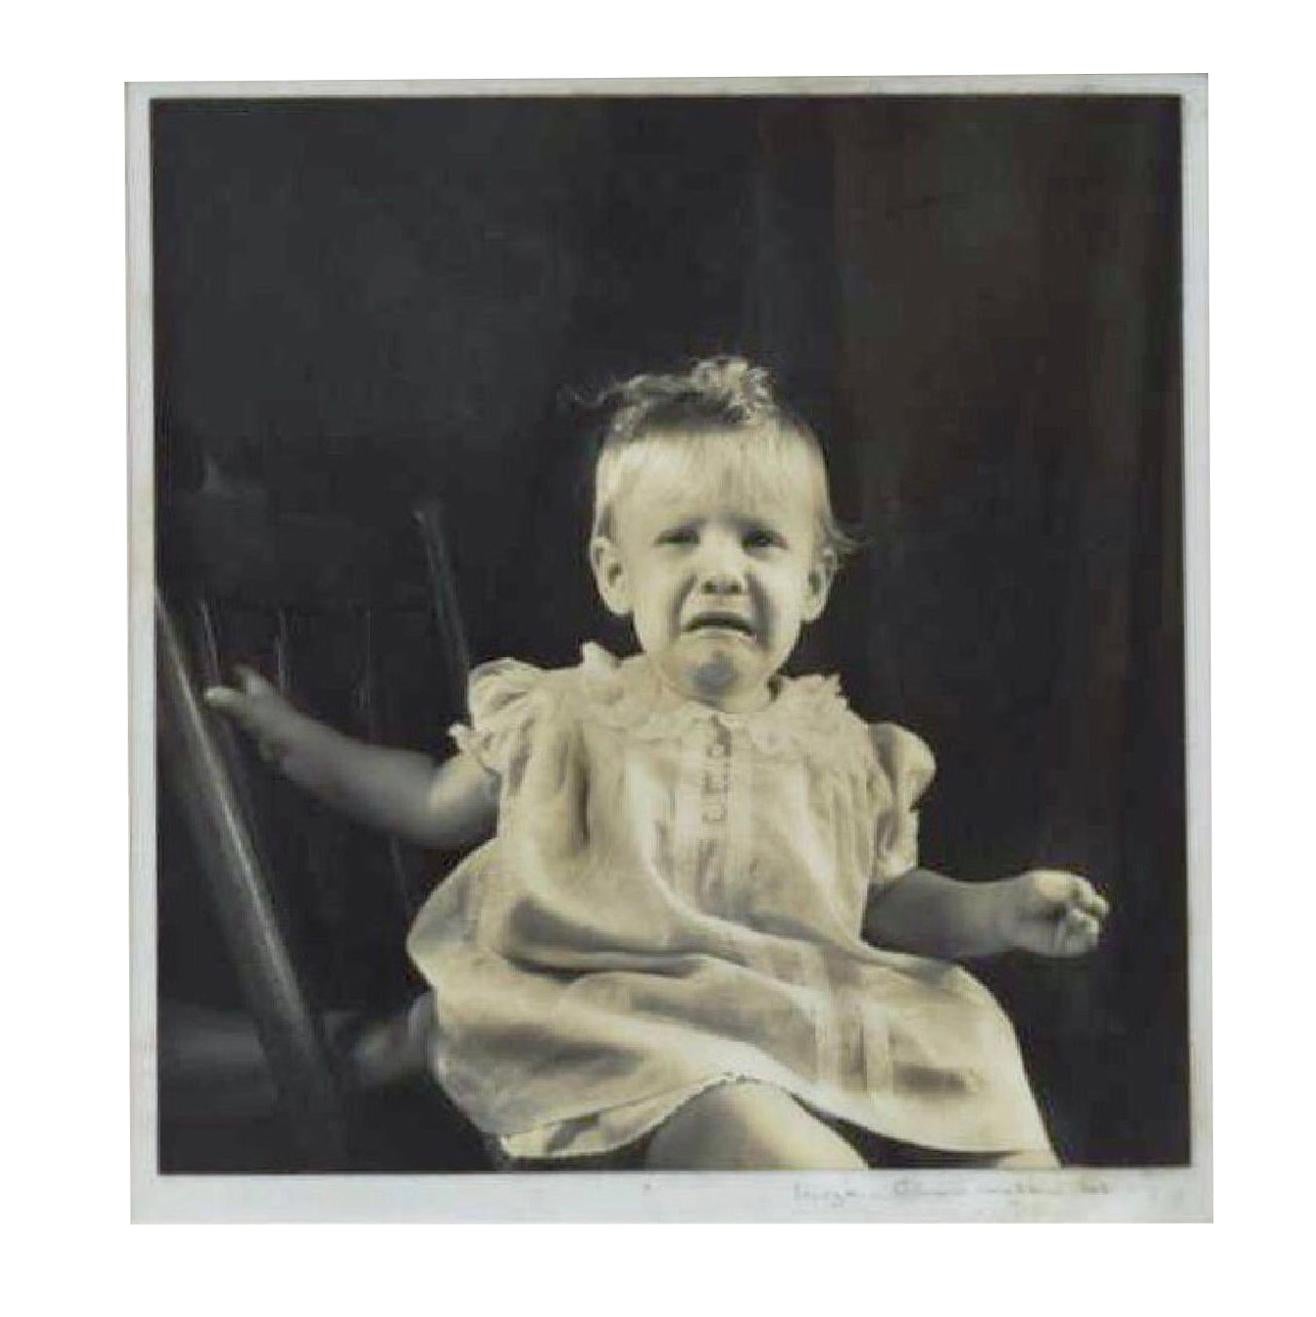 Modern Portrait Photograph Silver Print Imogen Cunningham 1946 Signed Cali f64